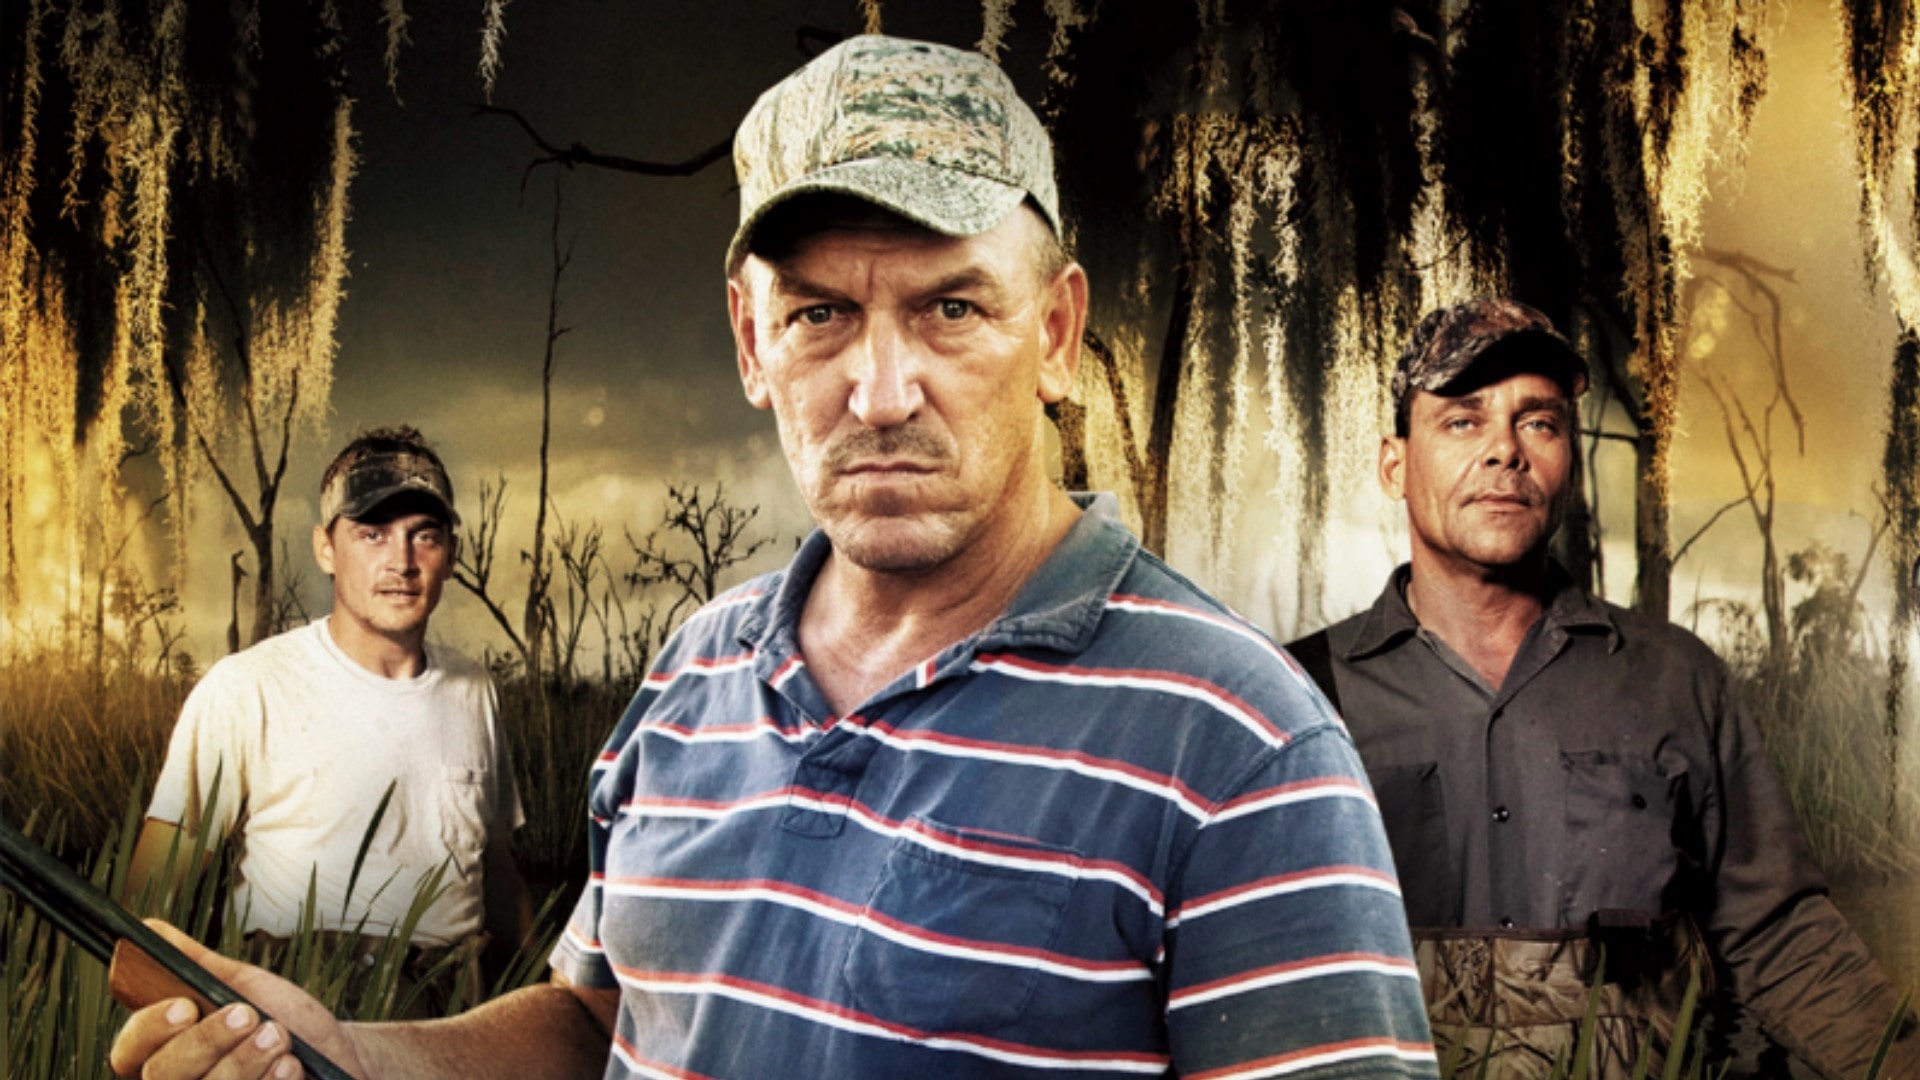 Swamp People Season 12 Watch Free Online on Putlocker